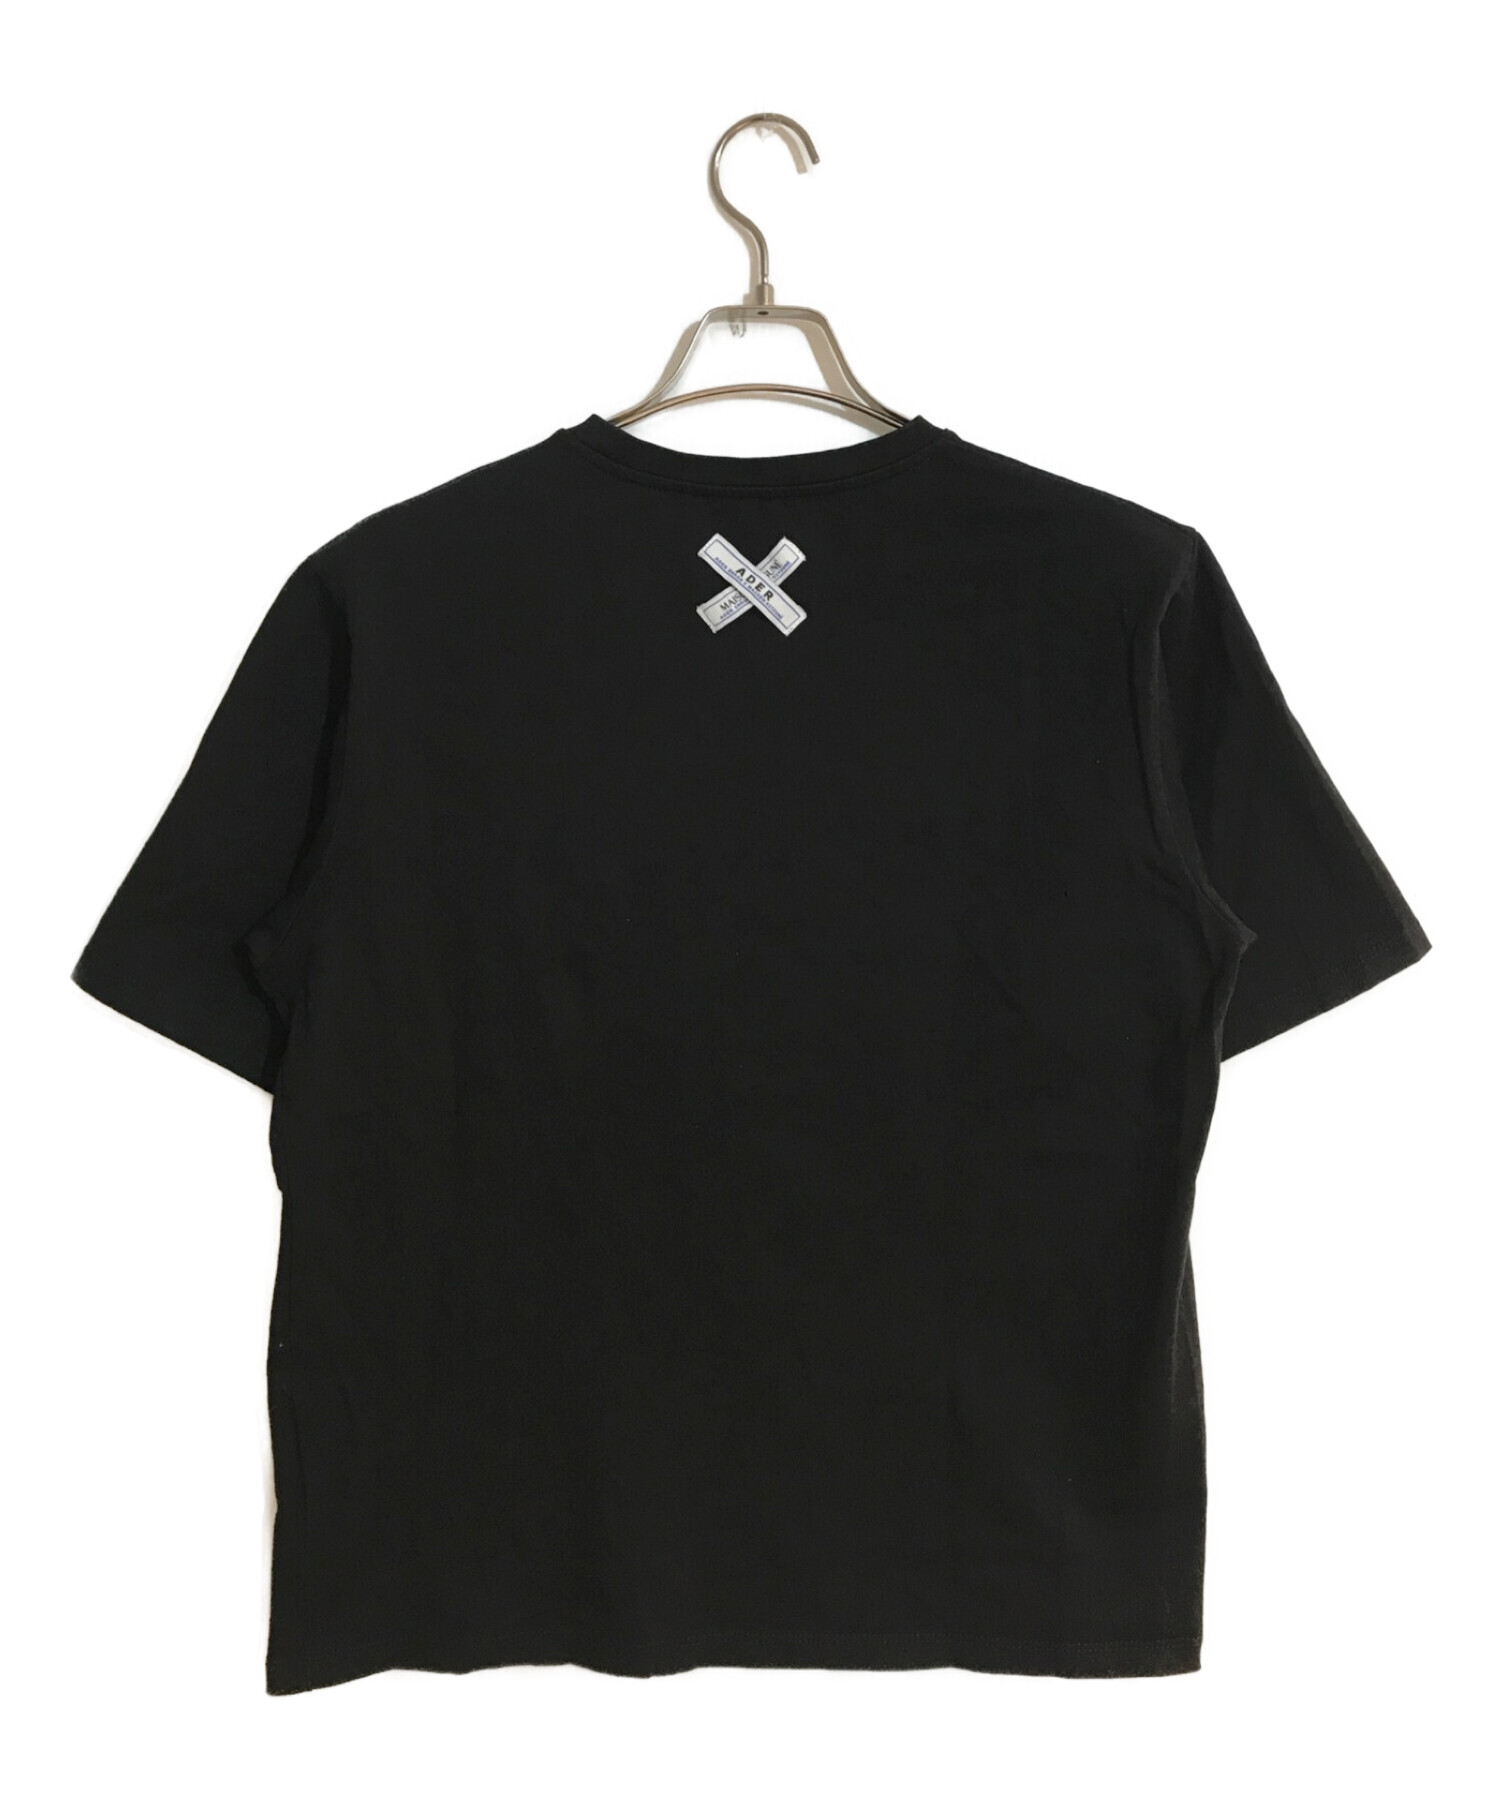 ADER error (アーダーエラー) MAISON KITSUNE (メゾンキツネ) kitsune layout t-shirt ブラック  サイズ:SIZE A3